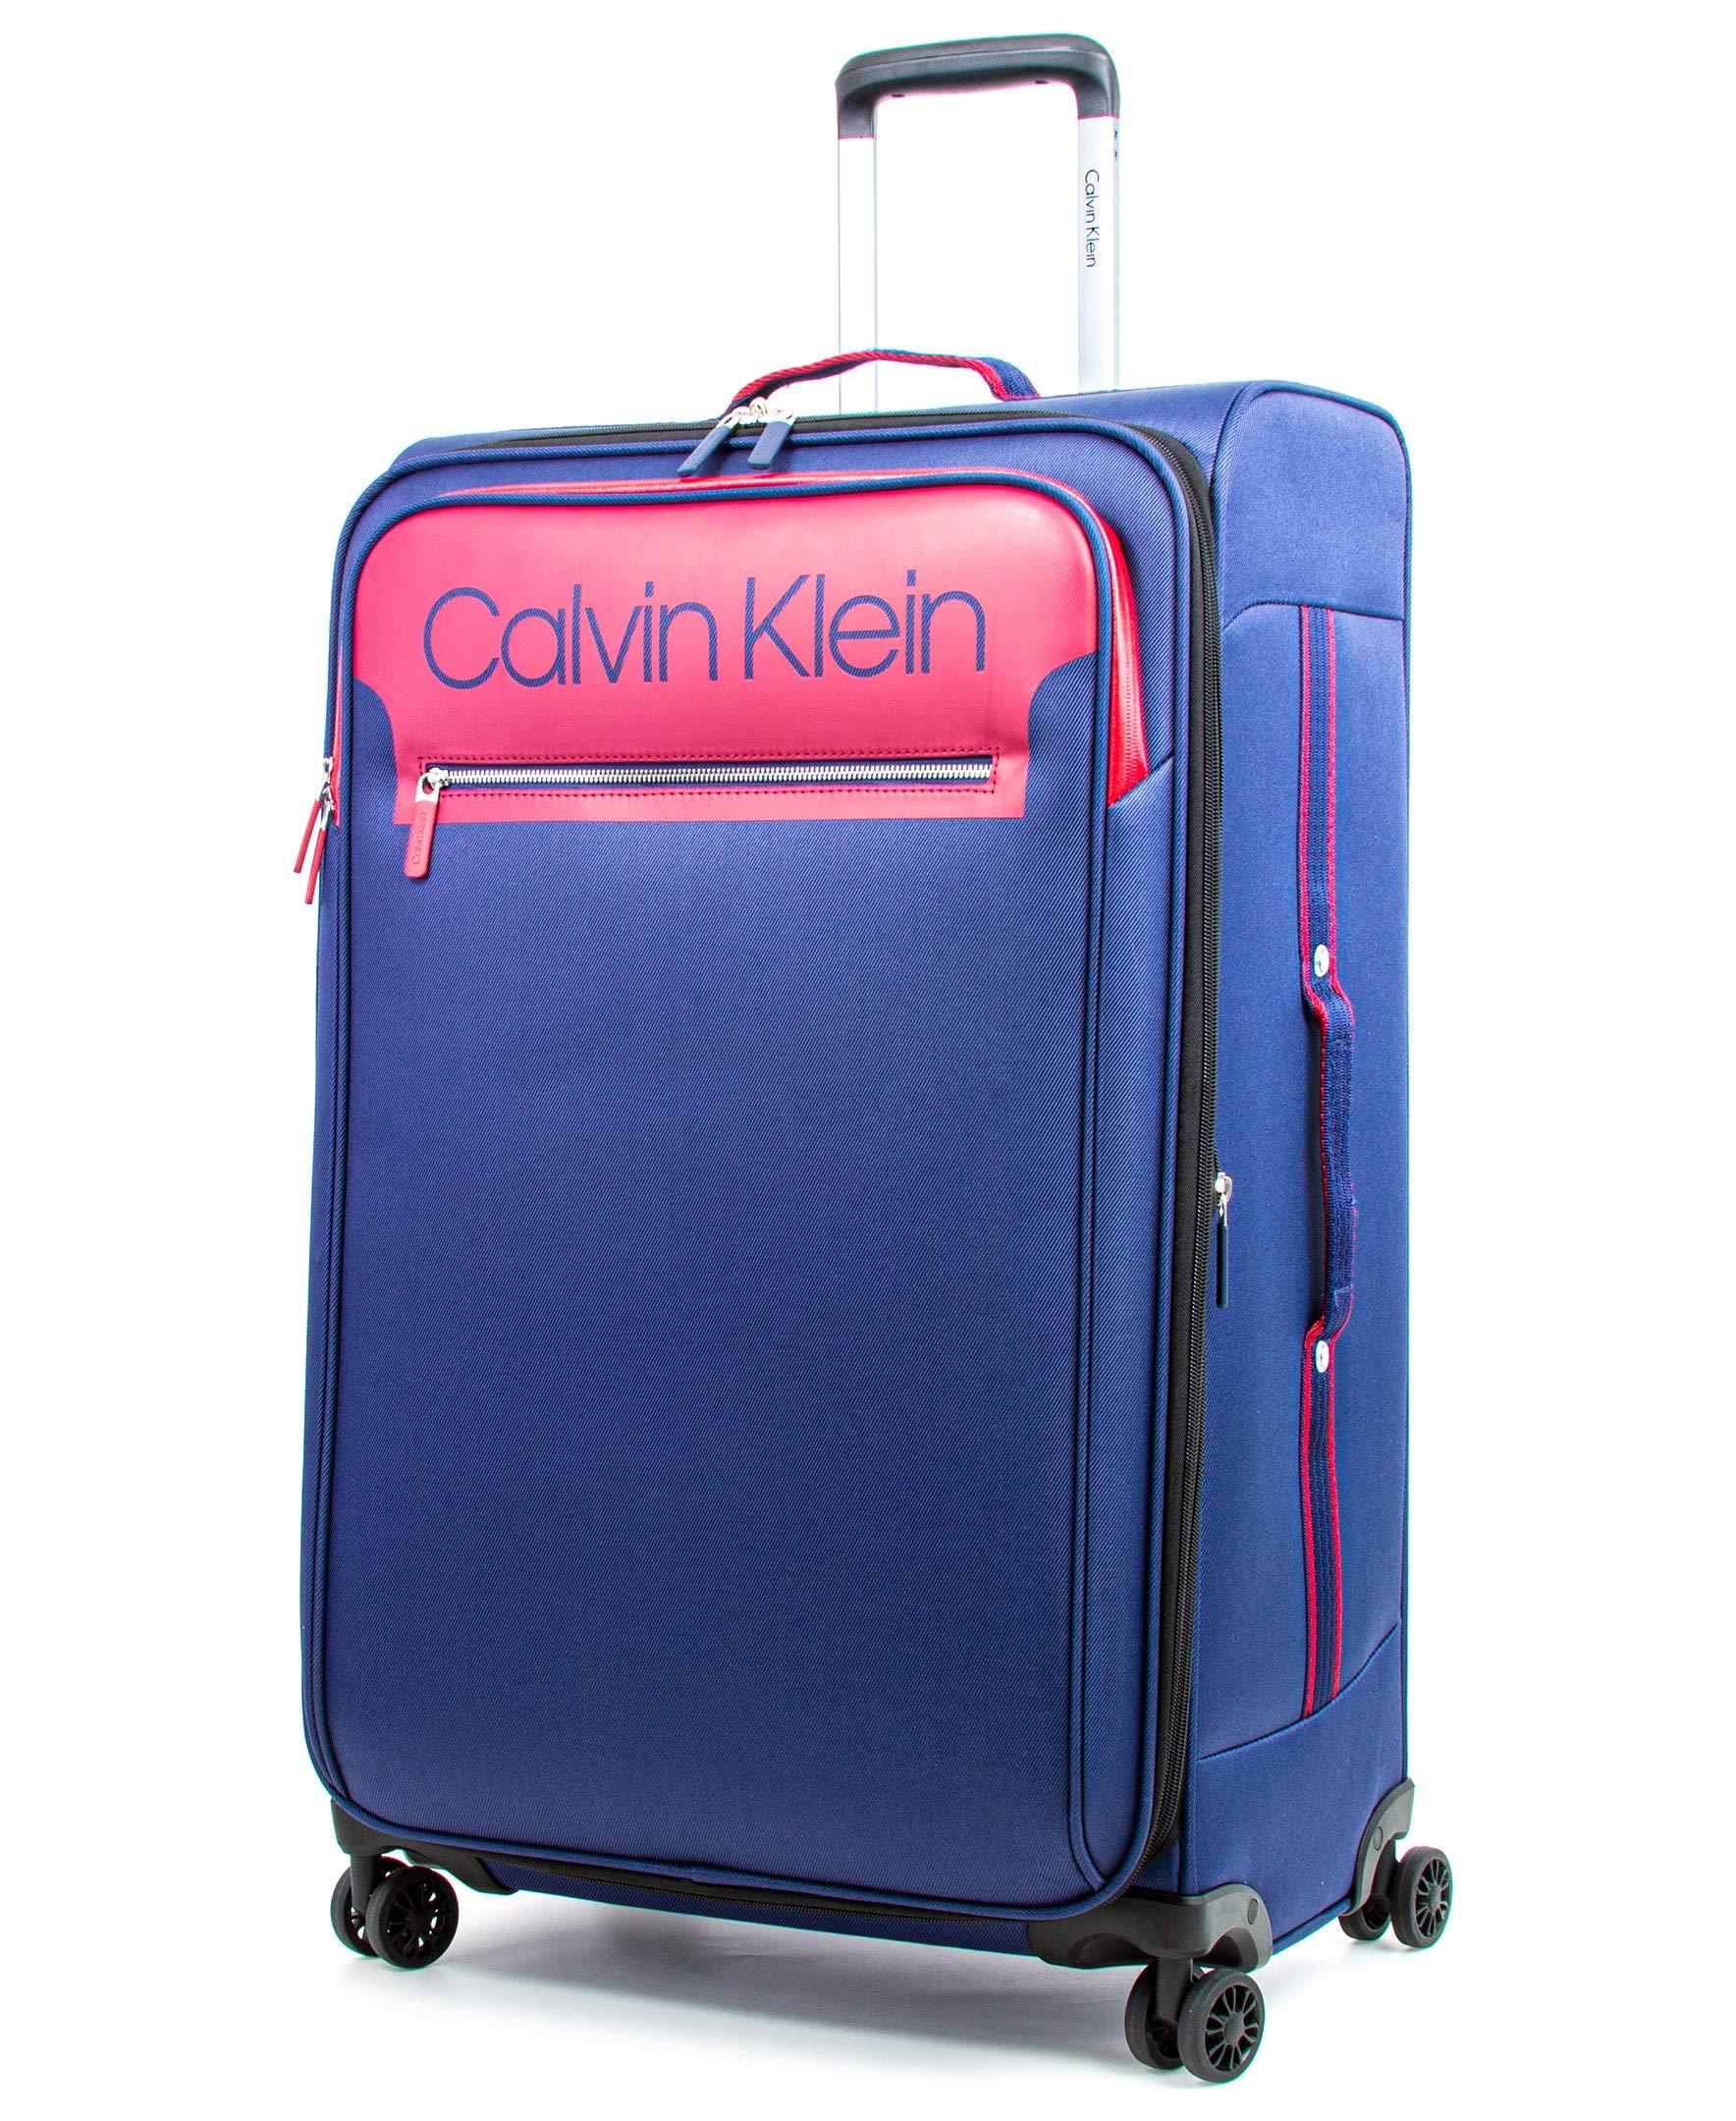 Calvin Klein Suitcase Sale Factory Sale, SAVE 58%.